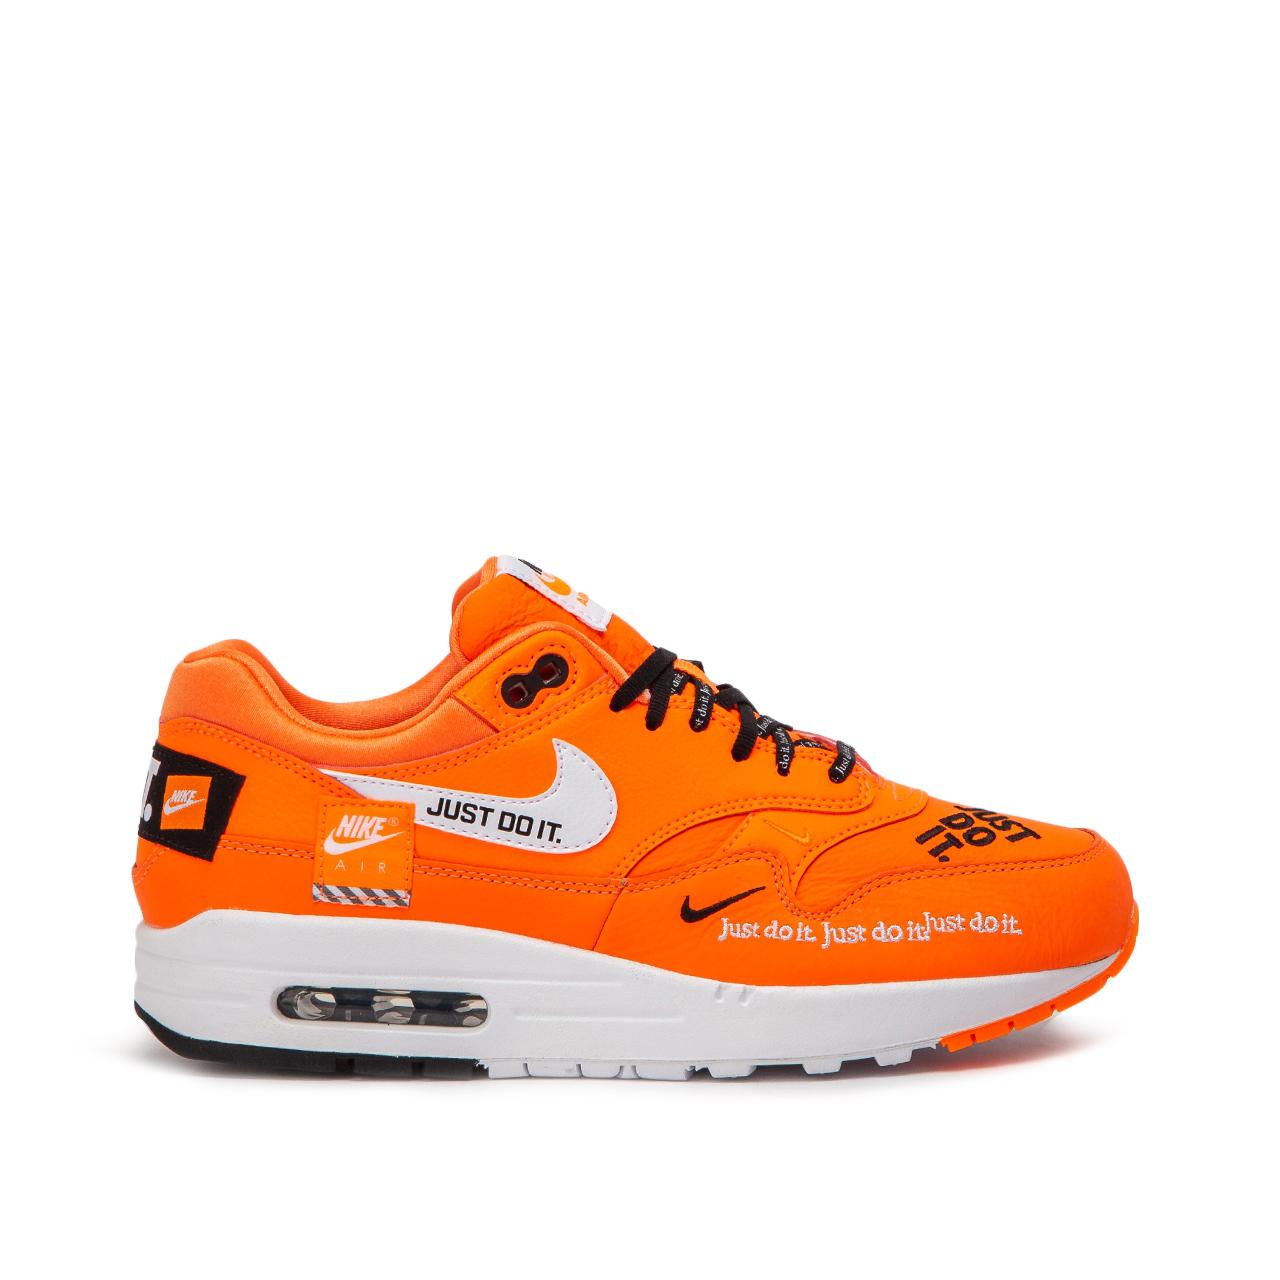 nike air max shoes orange